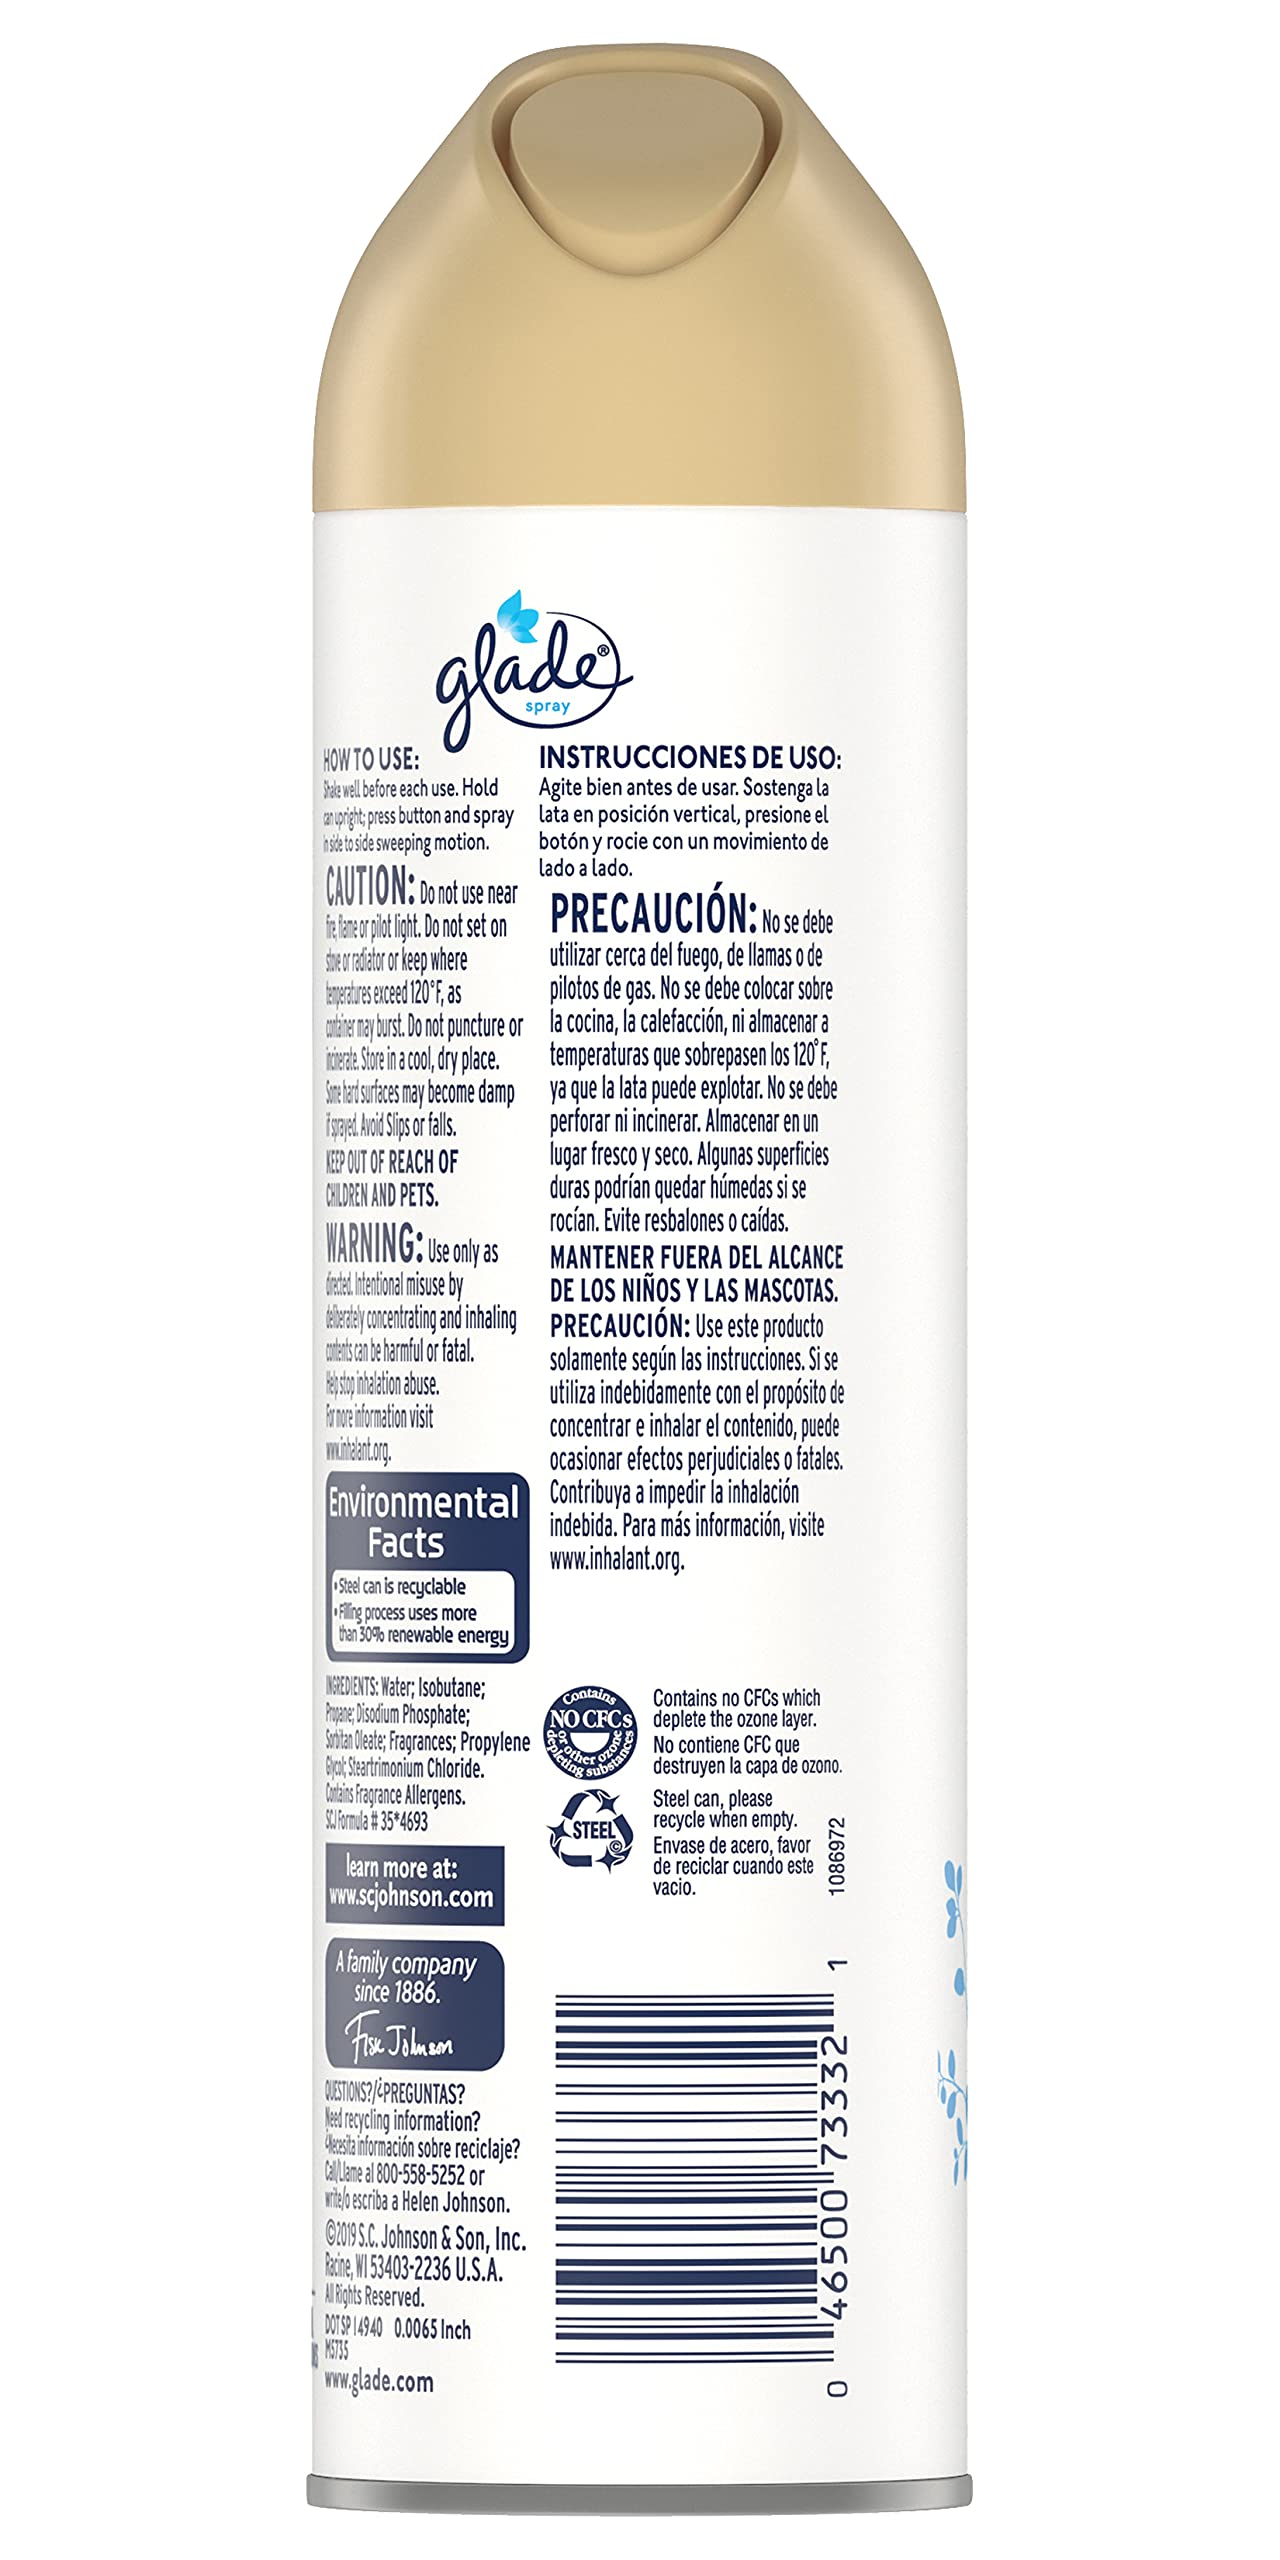 Glade Aerosol Air Freshener Clean Linen, 8 OZ (Pack of 6)